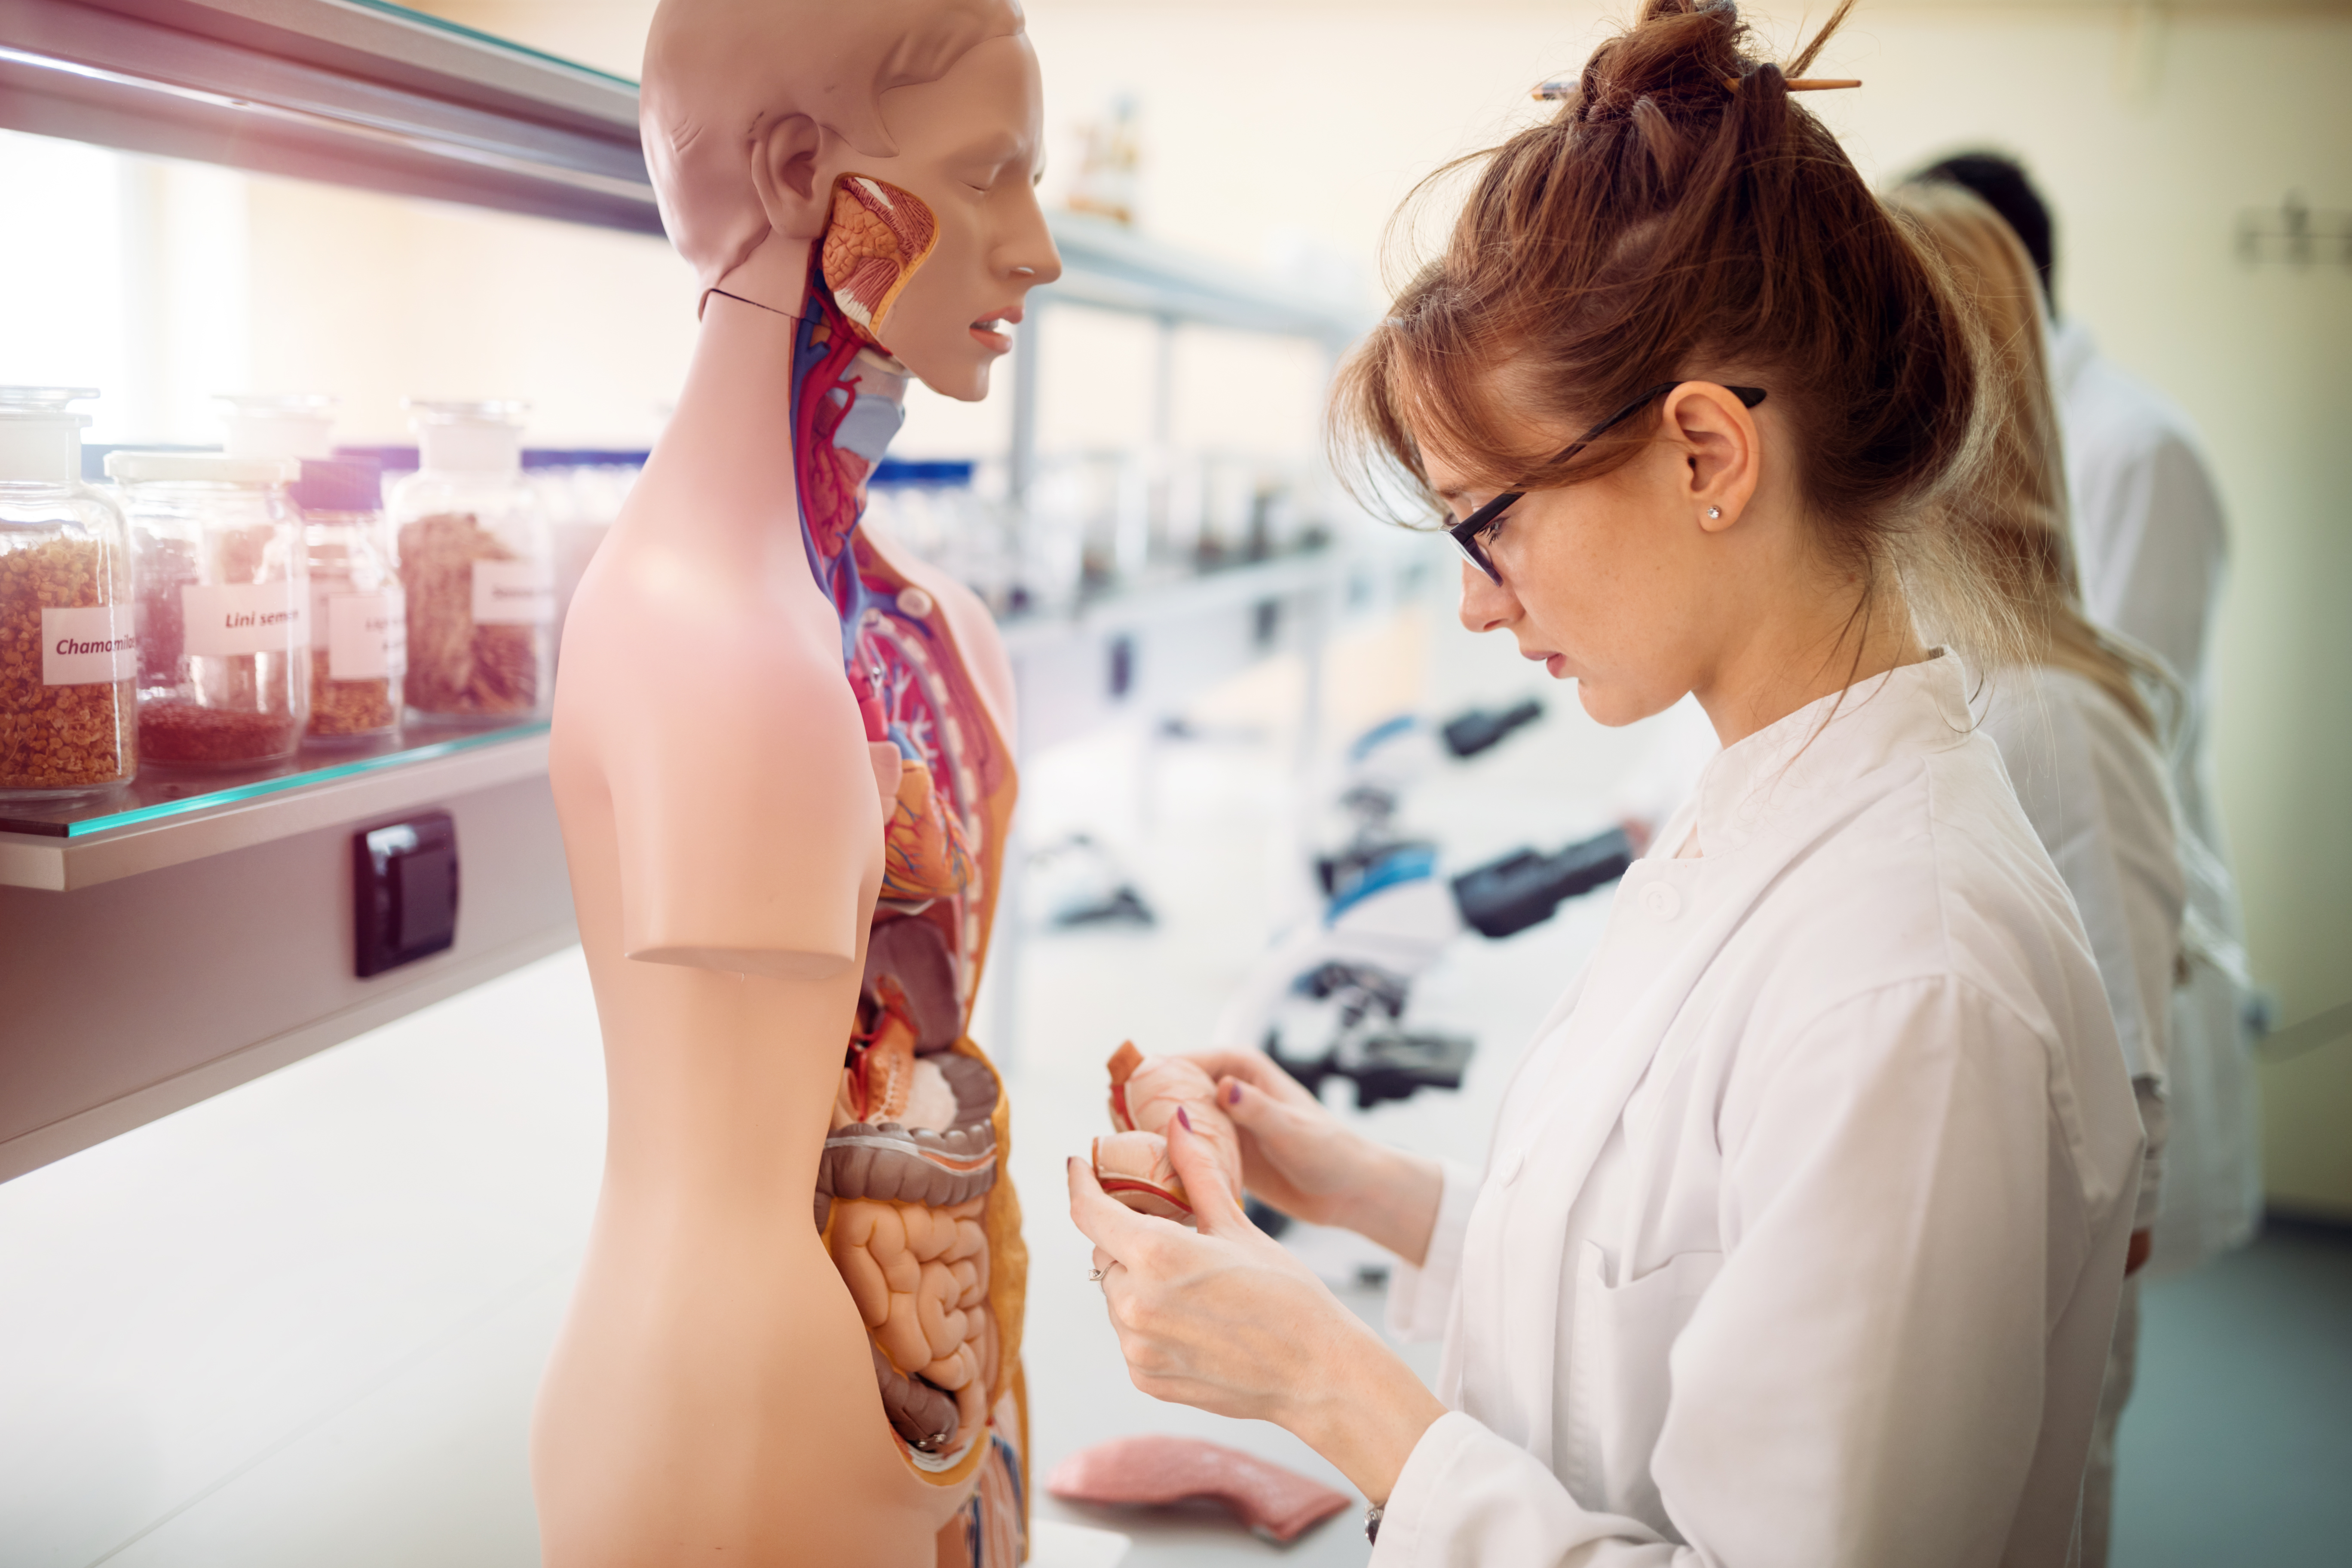 Woman working on anatomy model